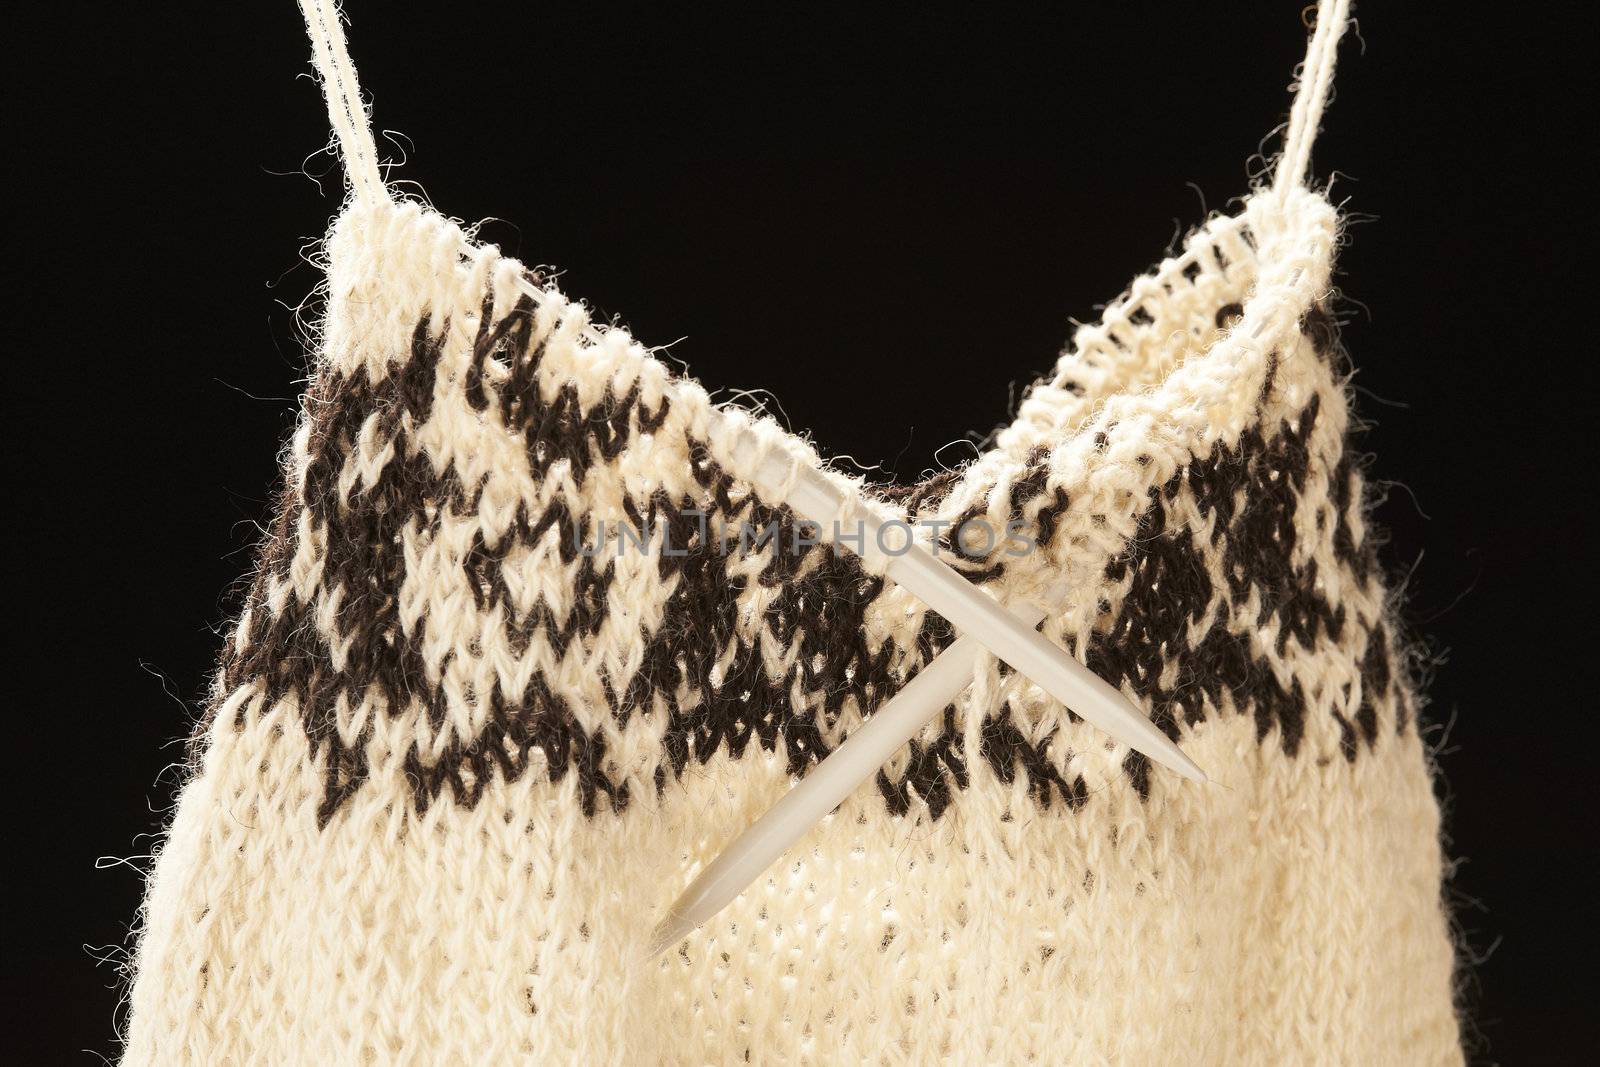 Knitted sweater by Eydfinnur